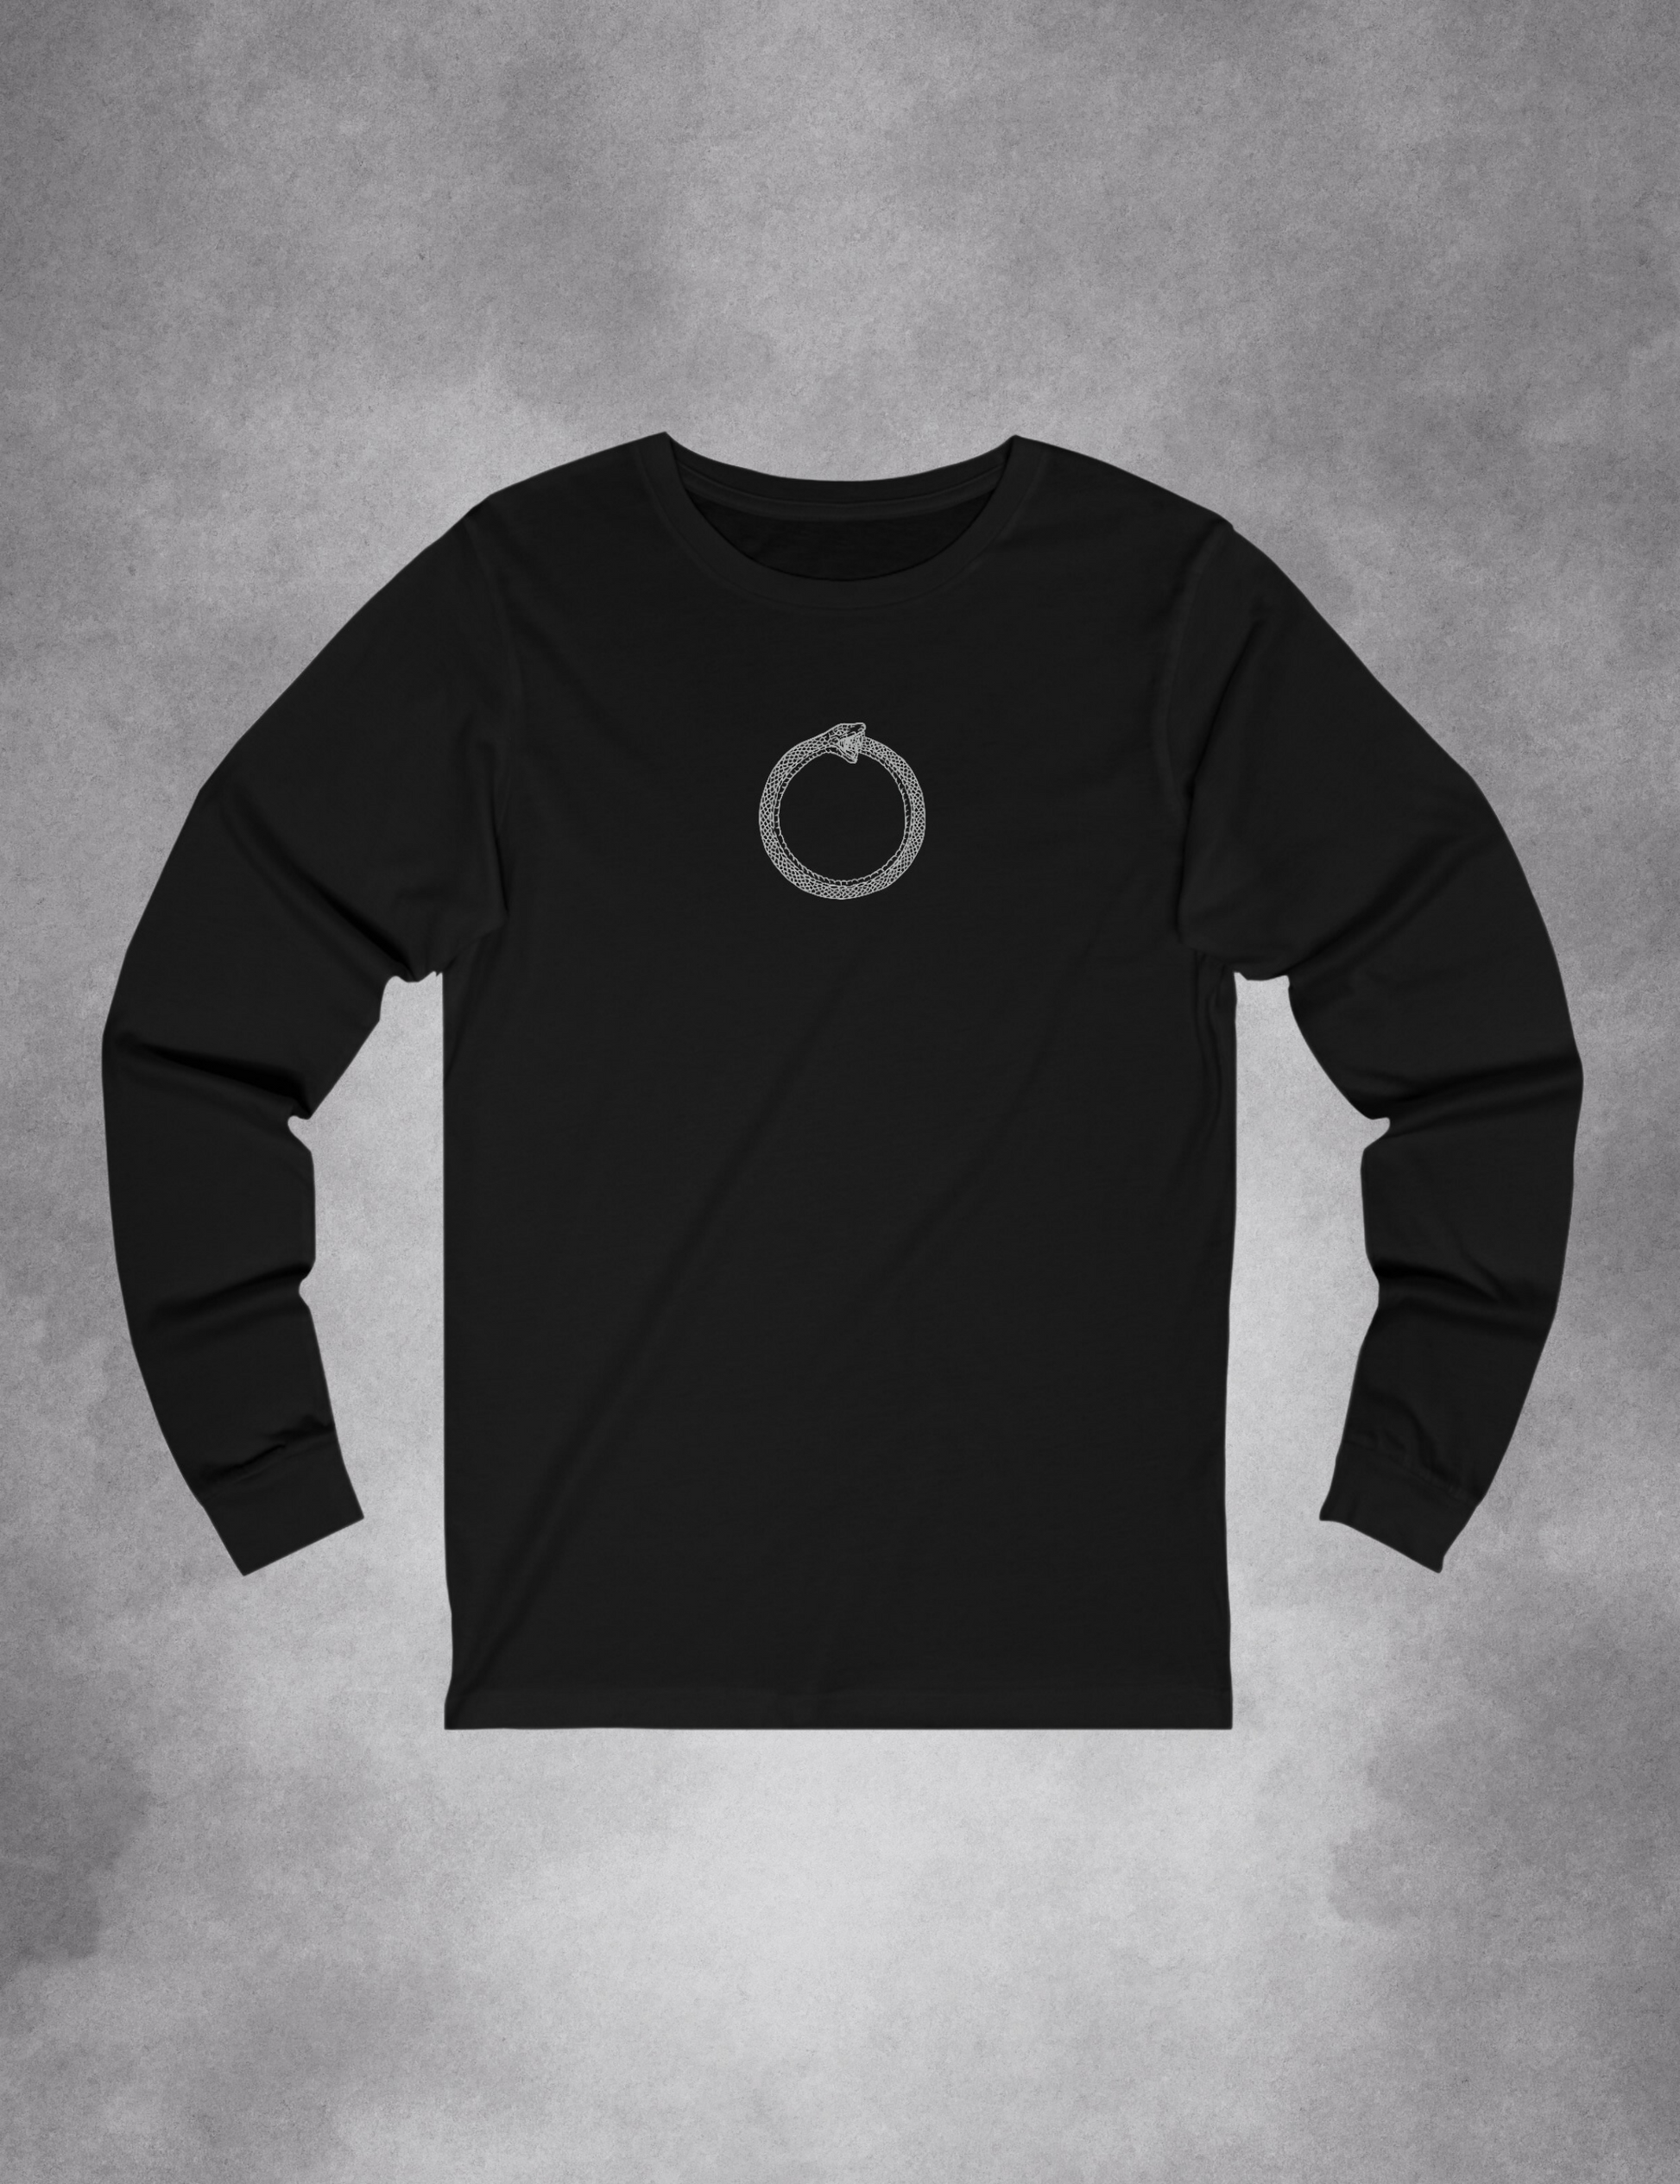 Ouroboros Occult Alchemy Plus Size Goth Long Sleeve Shirt